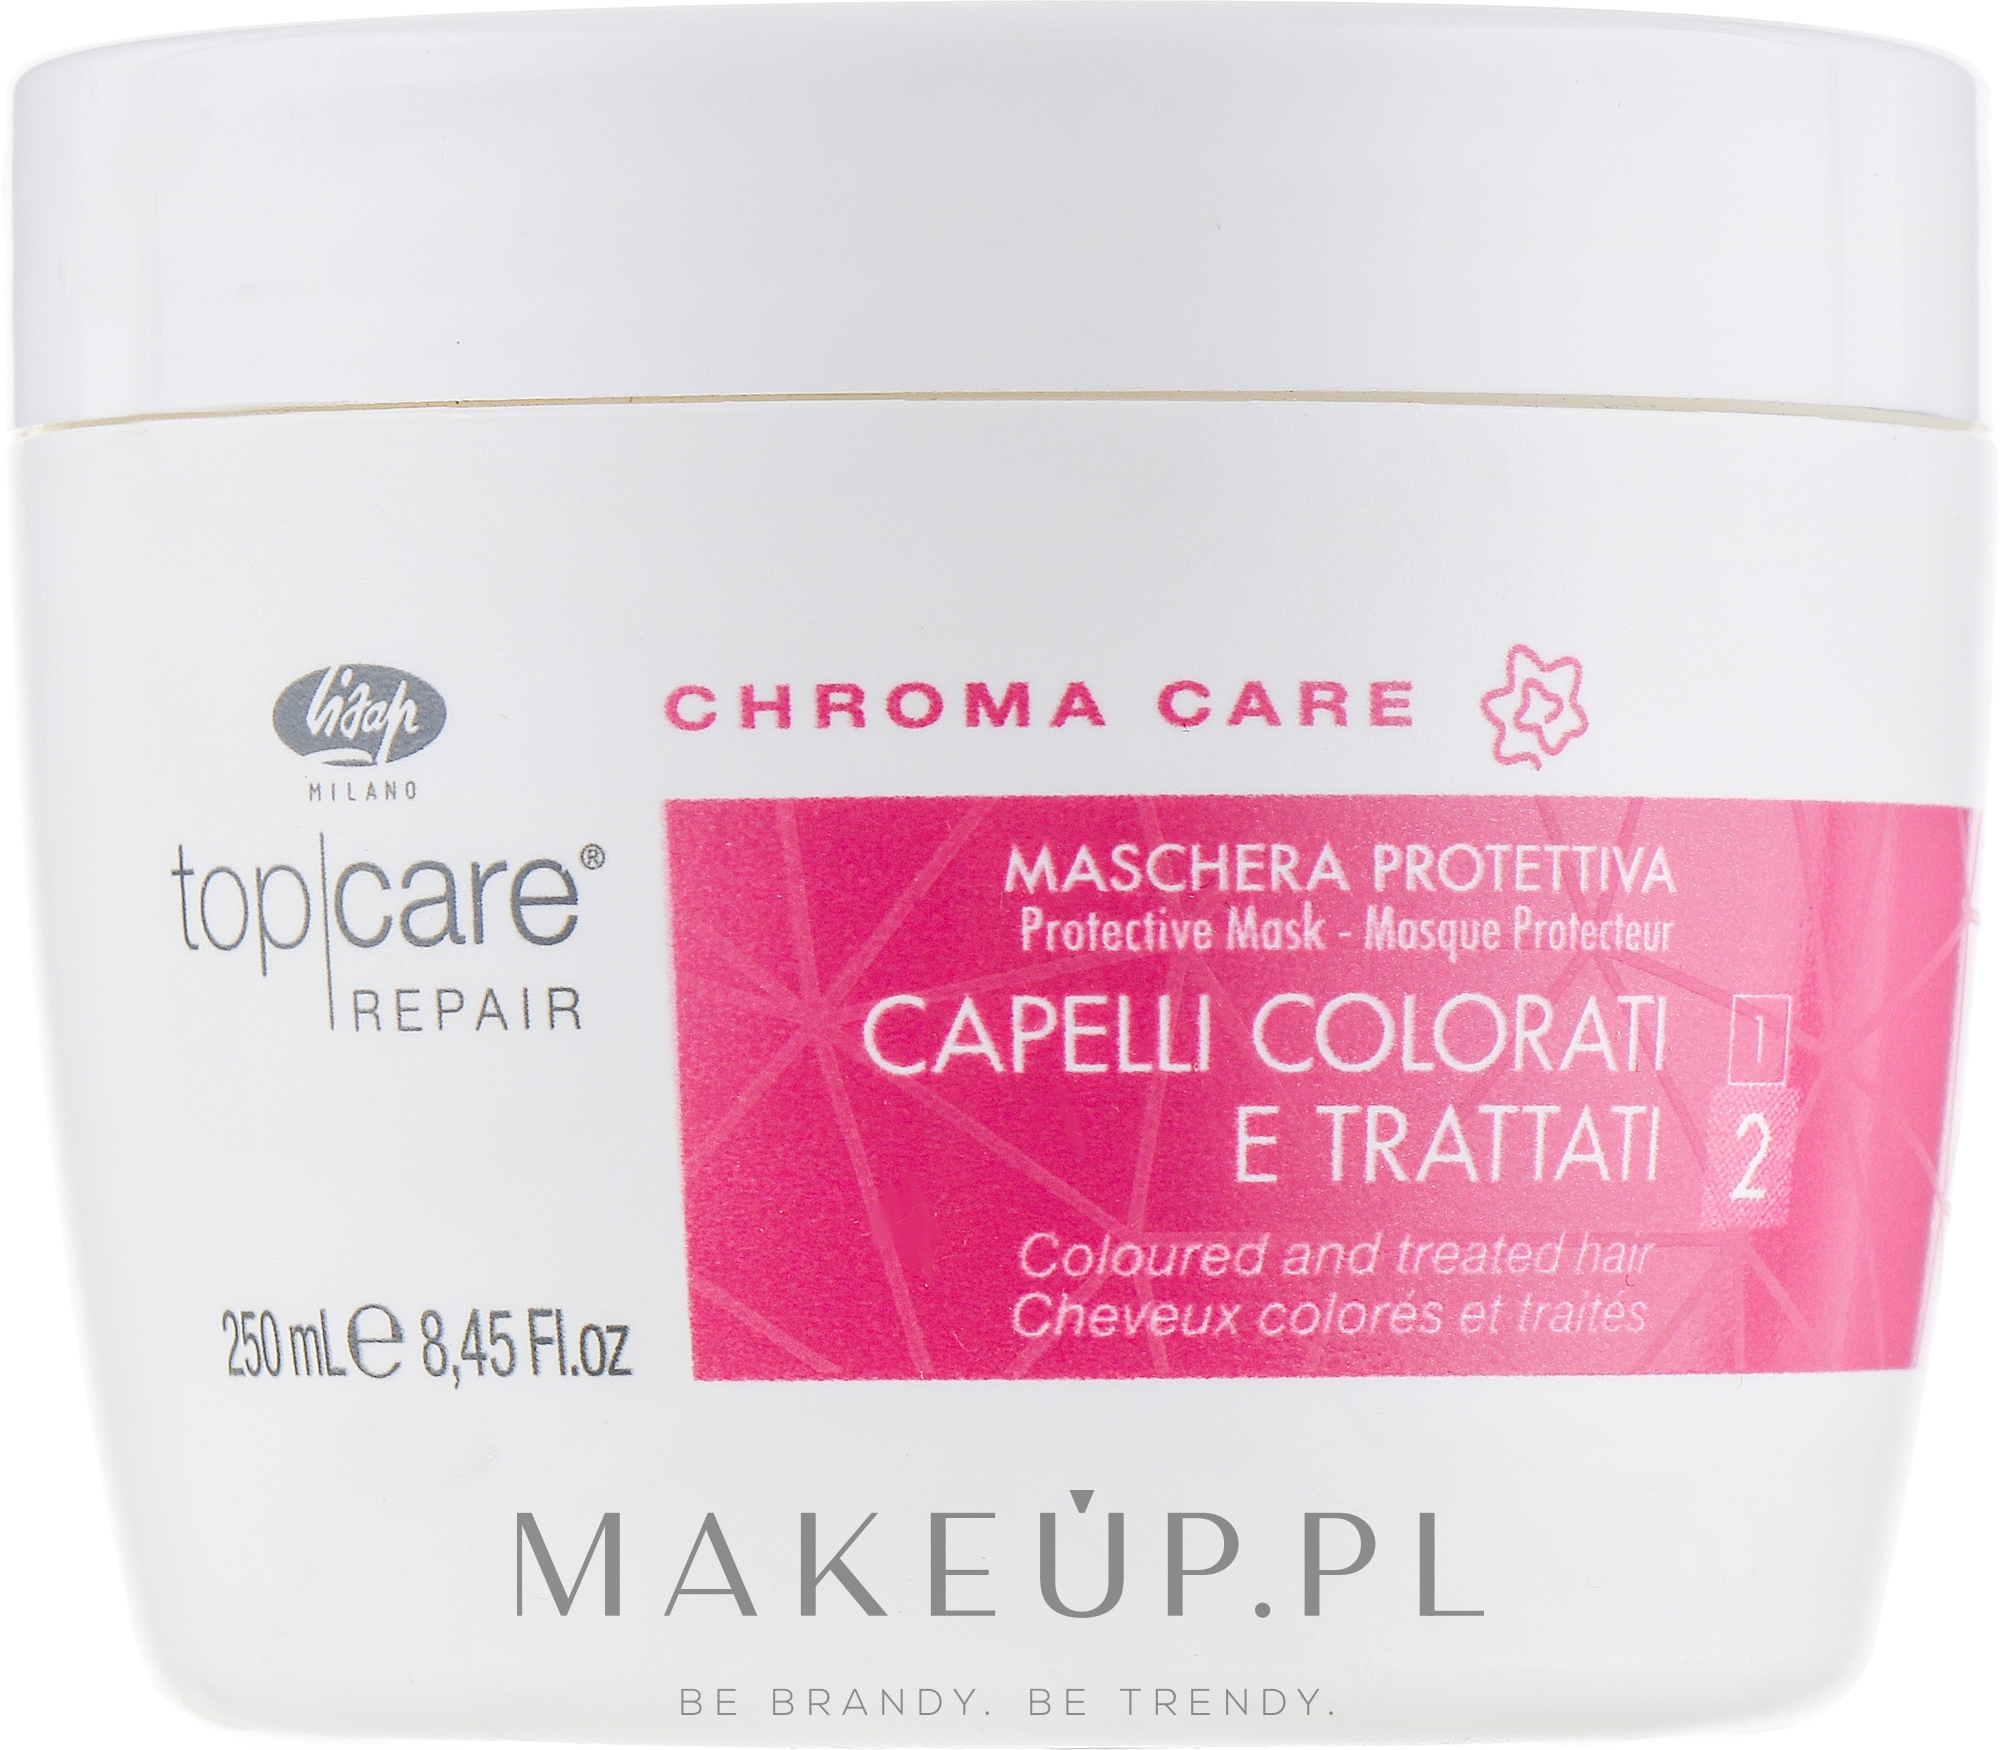 Maska ochronna do utrwalania koloru włosów - Lisap Top Care Repair Chroma Care Protective Mask — Zdjęcie 250 ml